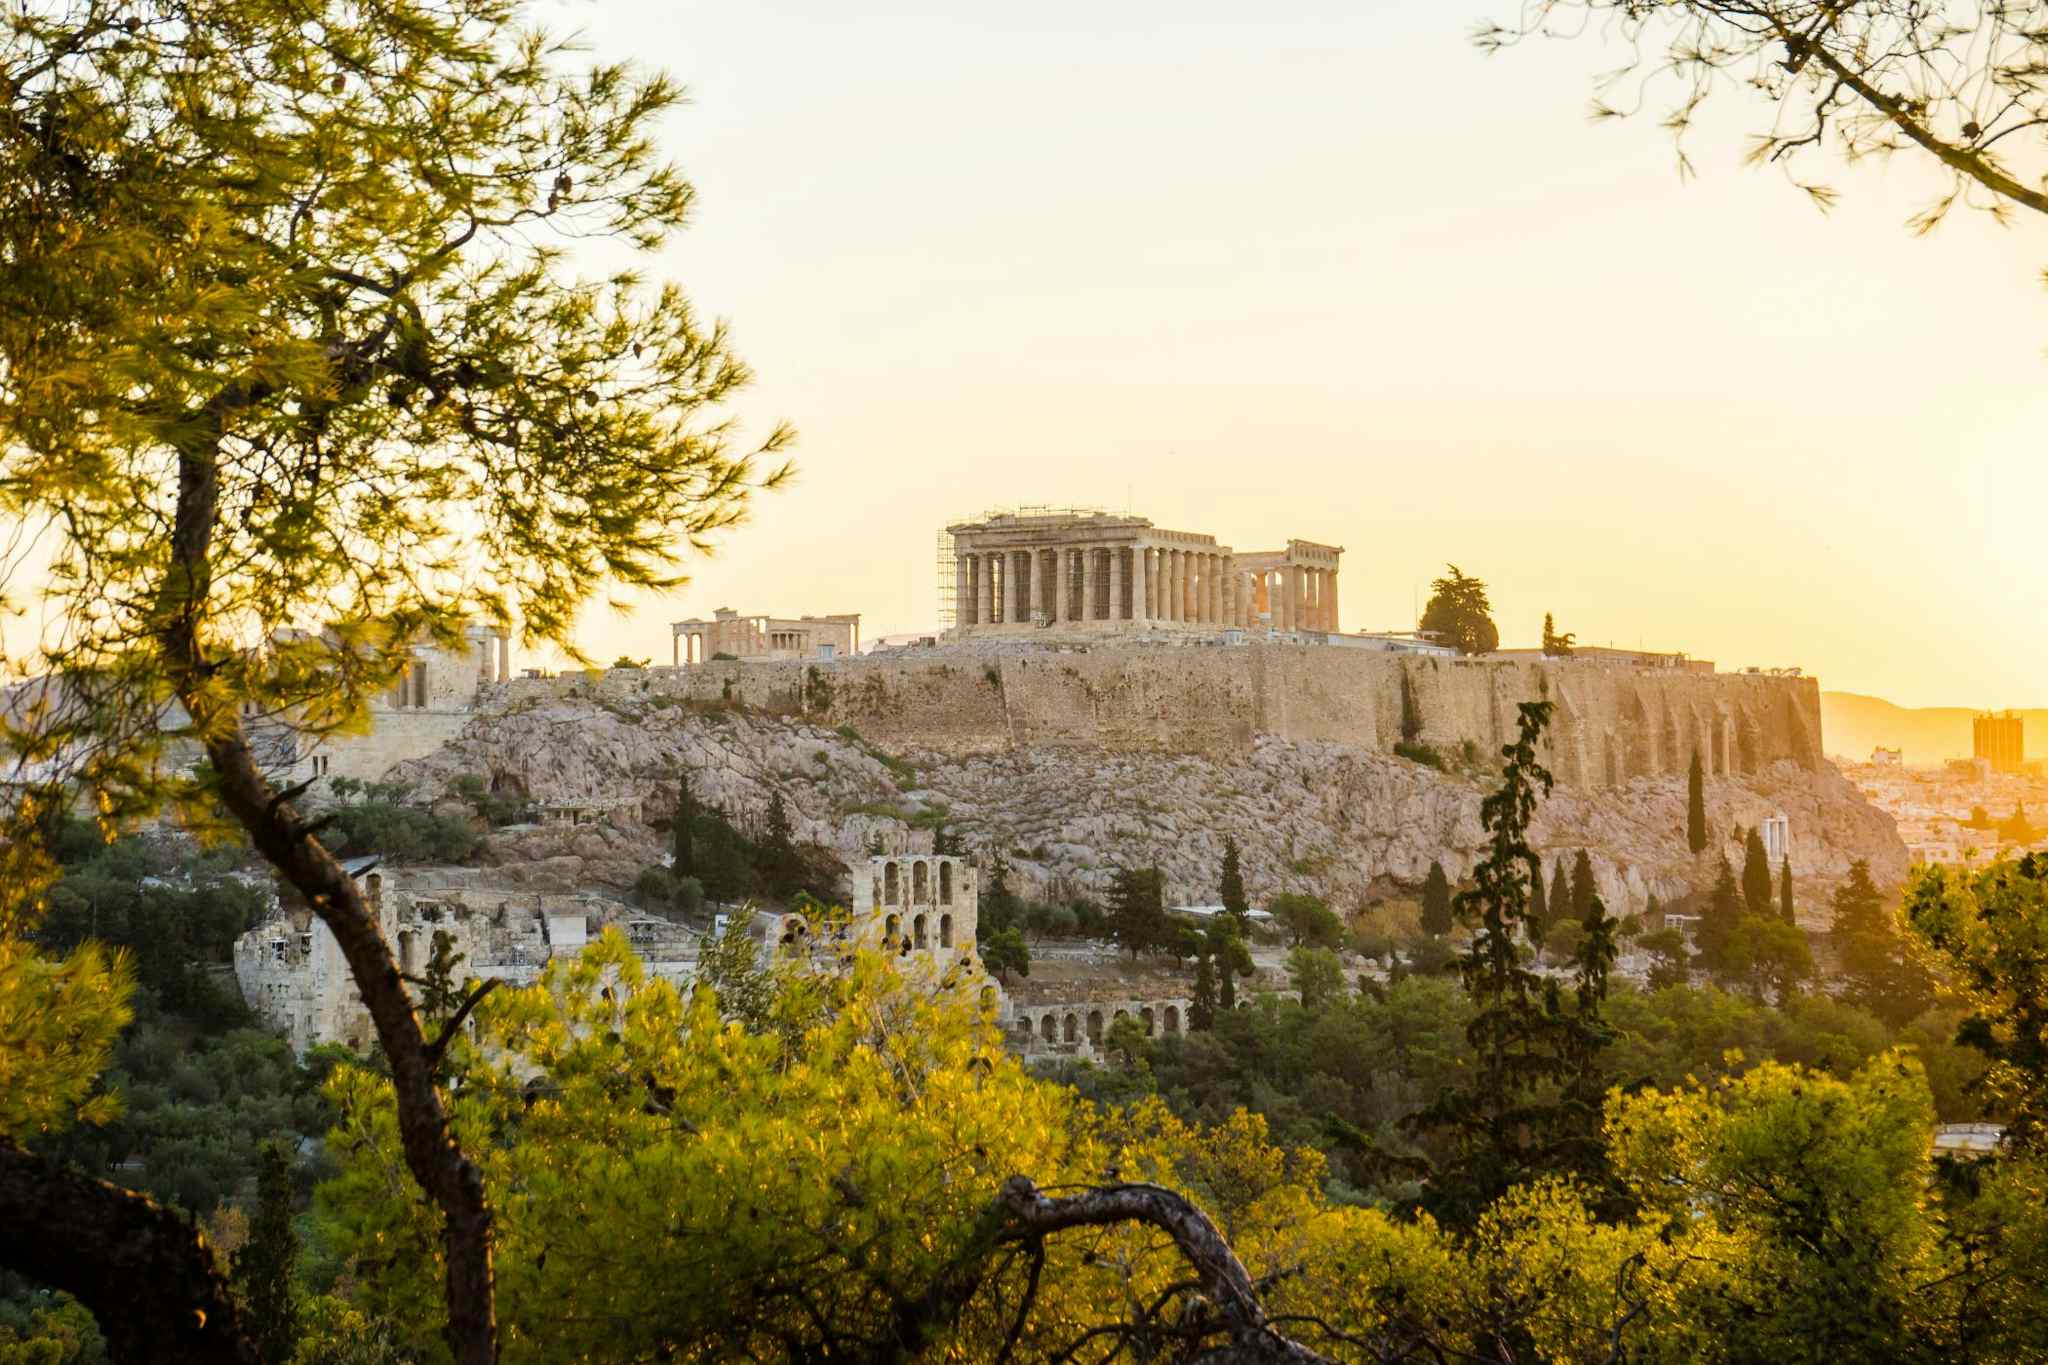 Acropolis, Athens, Greece

https://www.canva.com/photos/MAFLEpXOyJU/